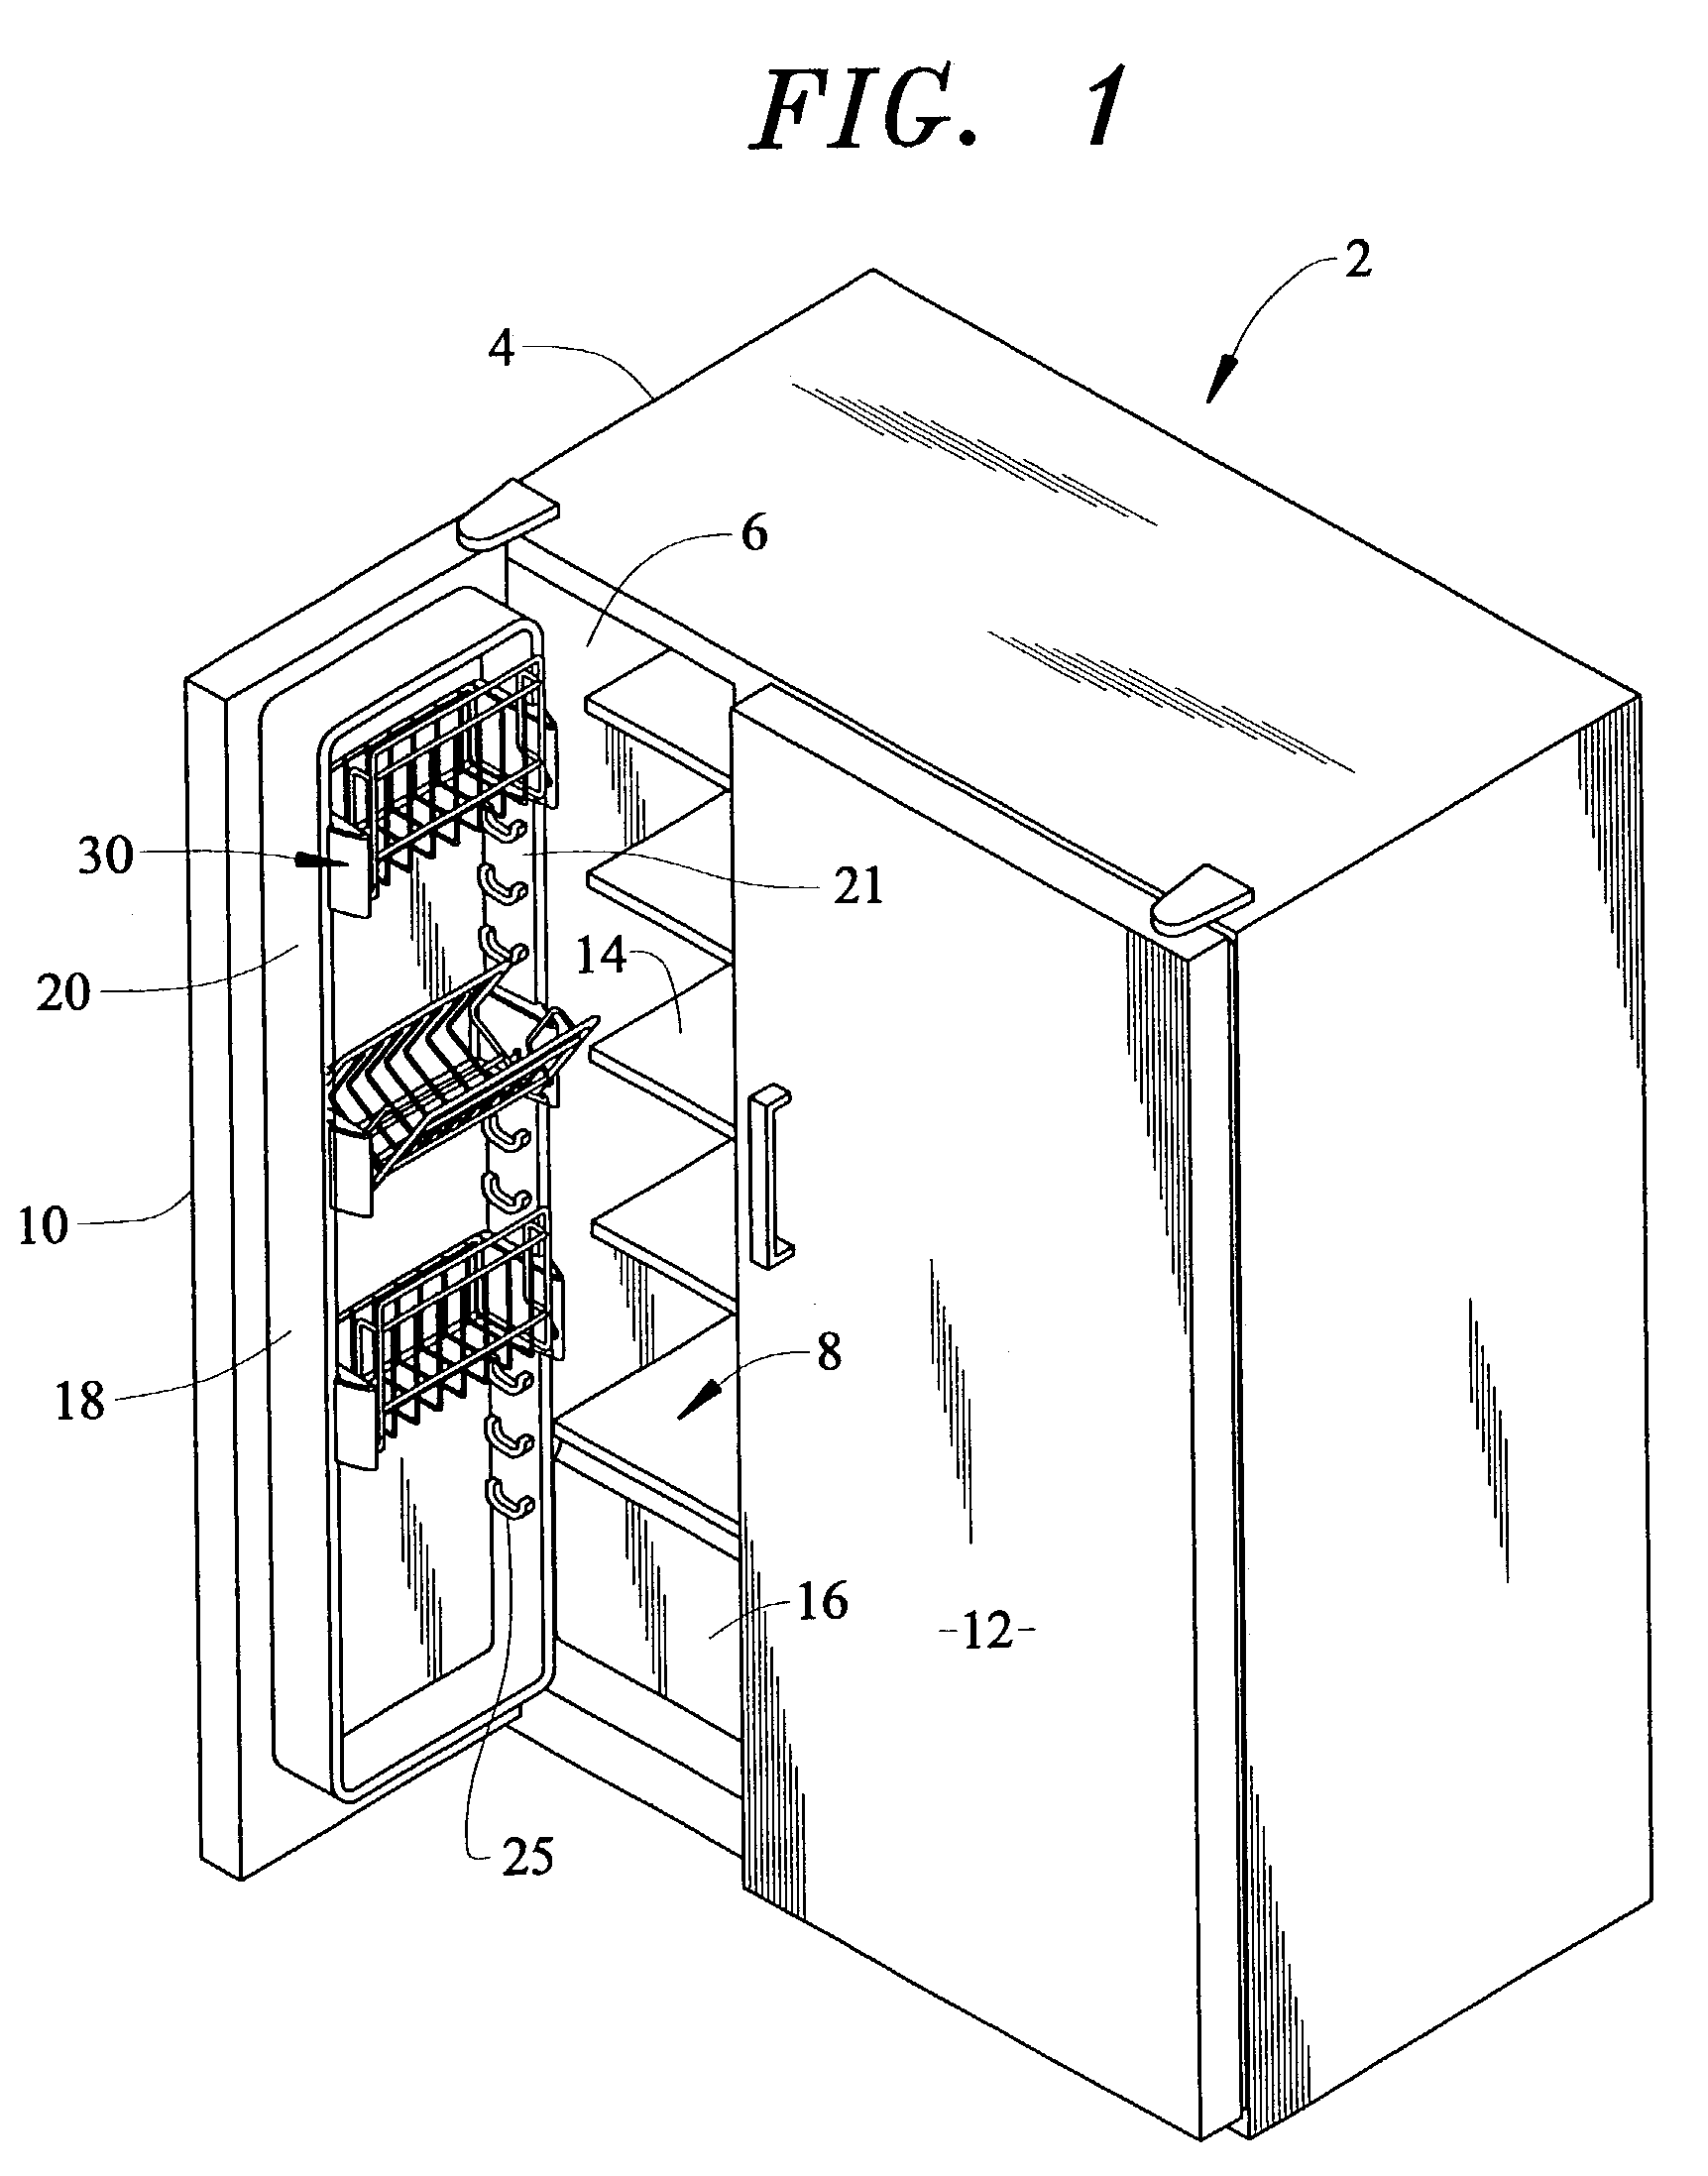 Tilt-out and pick-off basket assembly for a refrigerator door